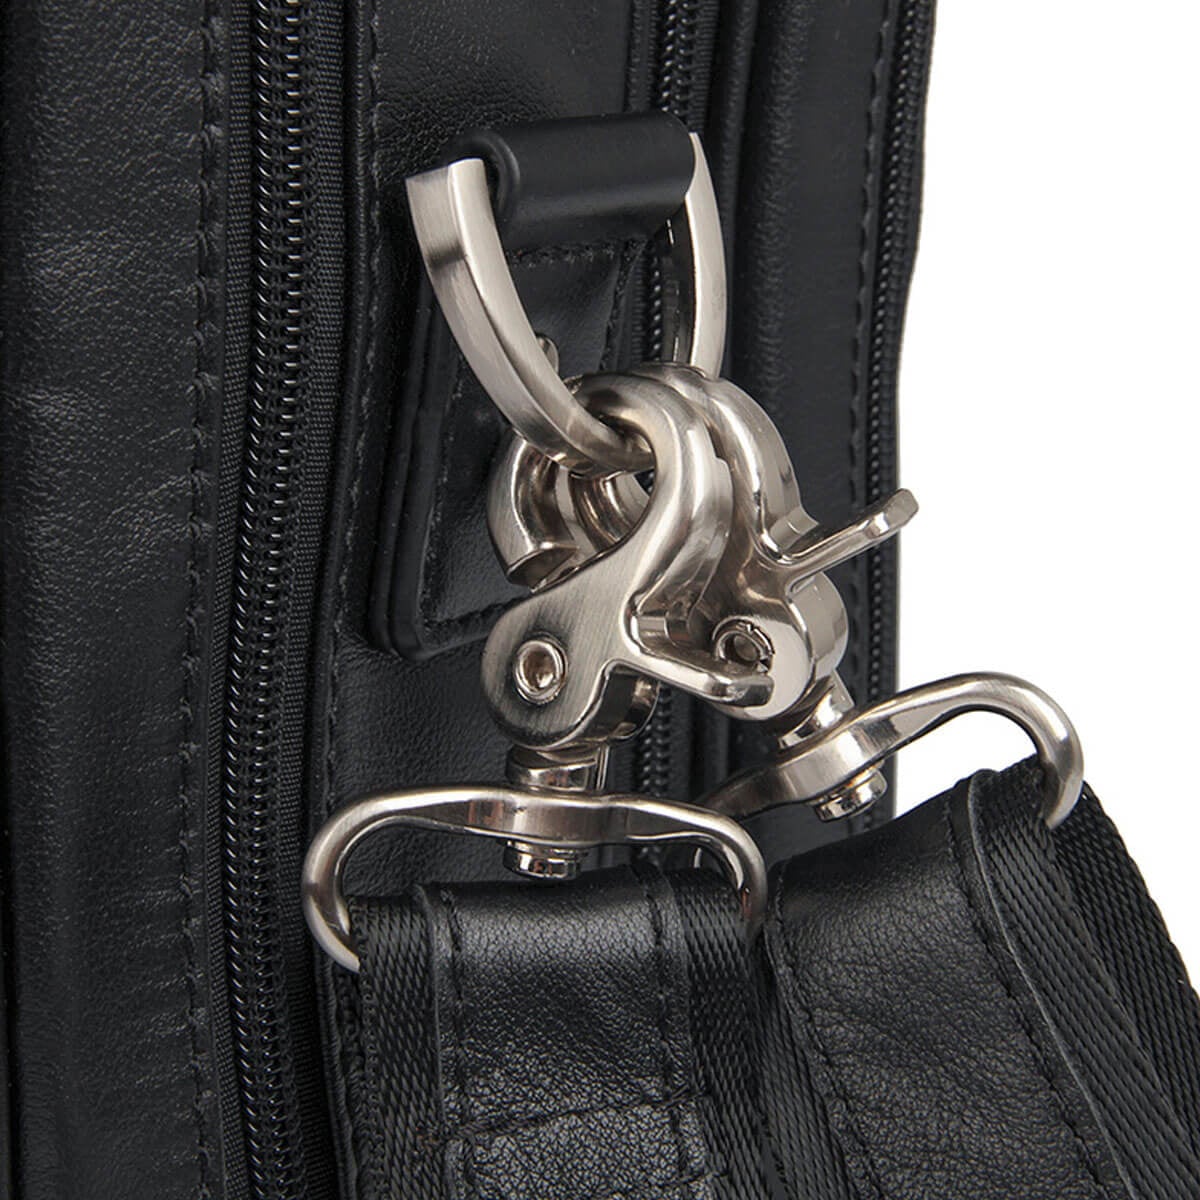 Premium Genuine Leather Bag Large Multi-Functional Travel Briefcase